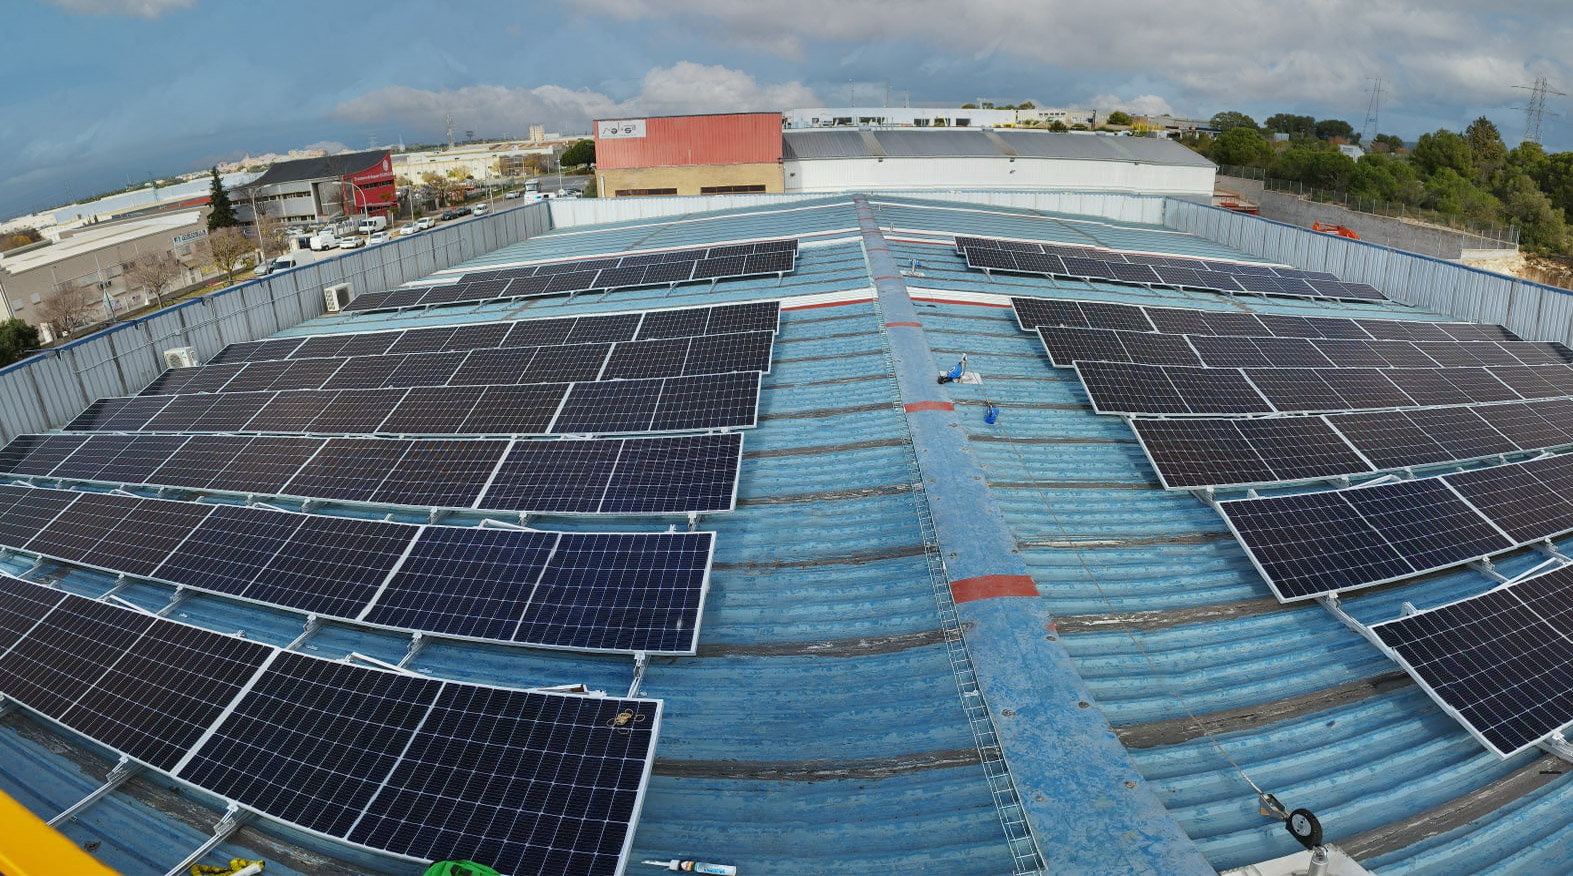 Rooftop view of solar panels at AESSEAL Tarragona